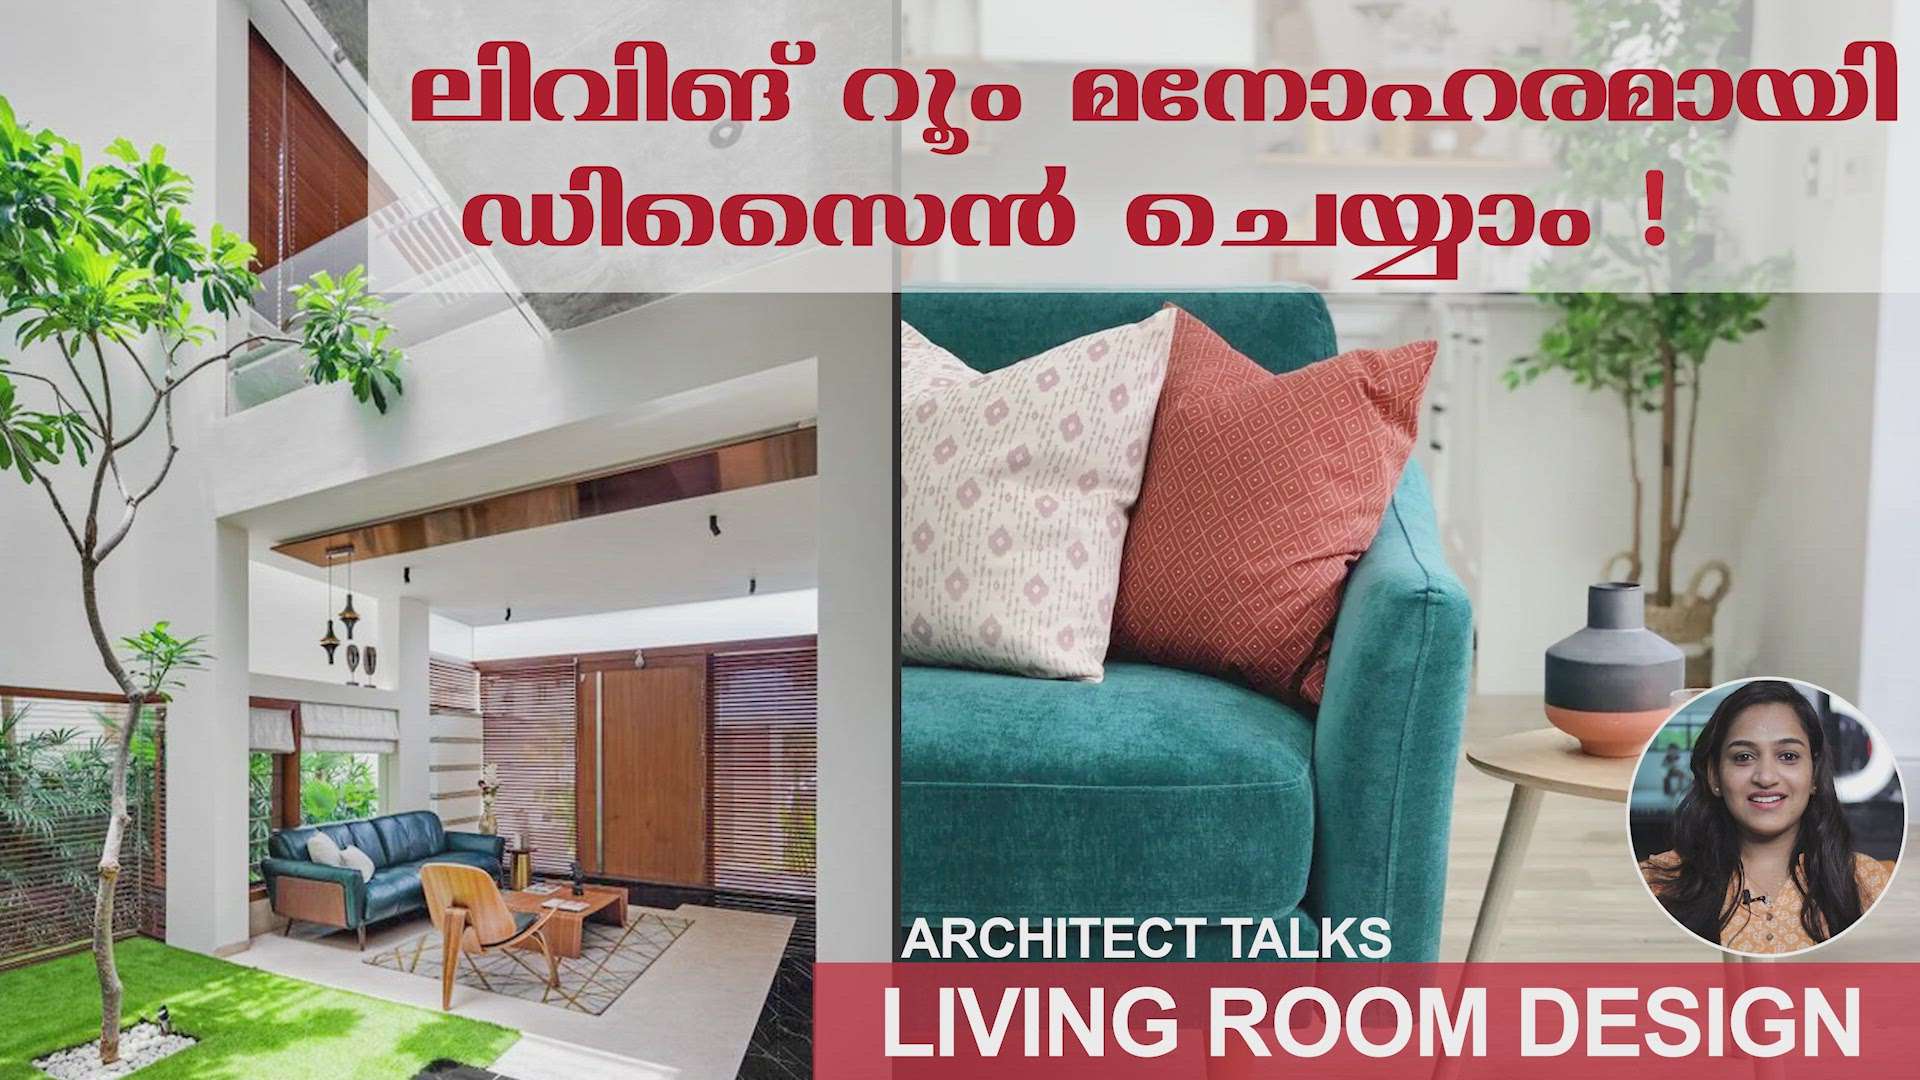 Living room Interior ഡിസൈൻ ചെയ്യുമ്പോൾ മറക്കാതെ ശ്രെദ്ധിക്കുക!!!
 #creatorsofkolo  #avoid  #design #interiordesign  #interior #mistakes #arjanissony  #janissony  #axyzarchitects  #LivingroomDesigns  #LivingRoomSofa  #LivingRoomDecors